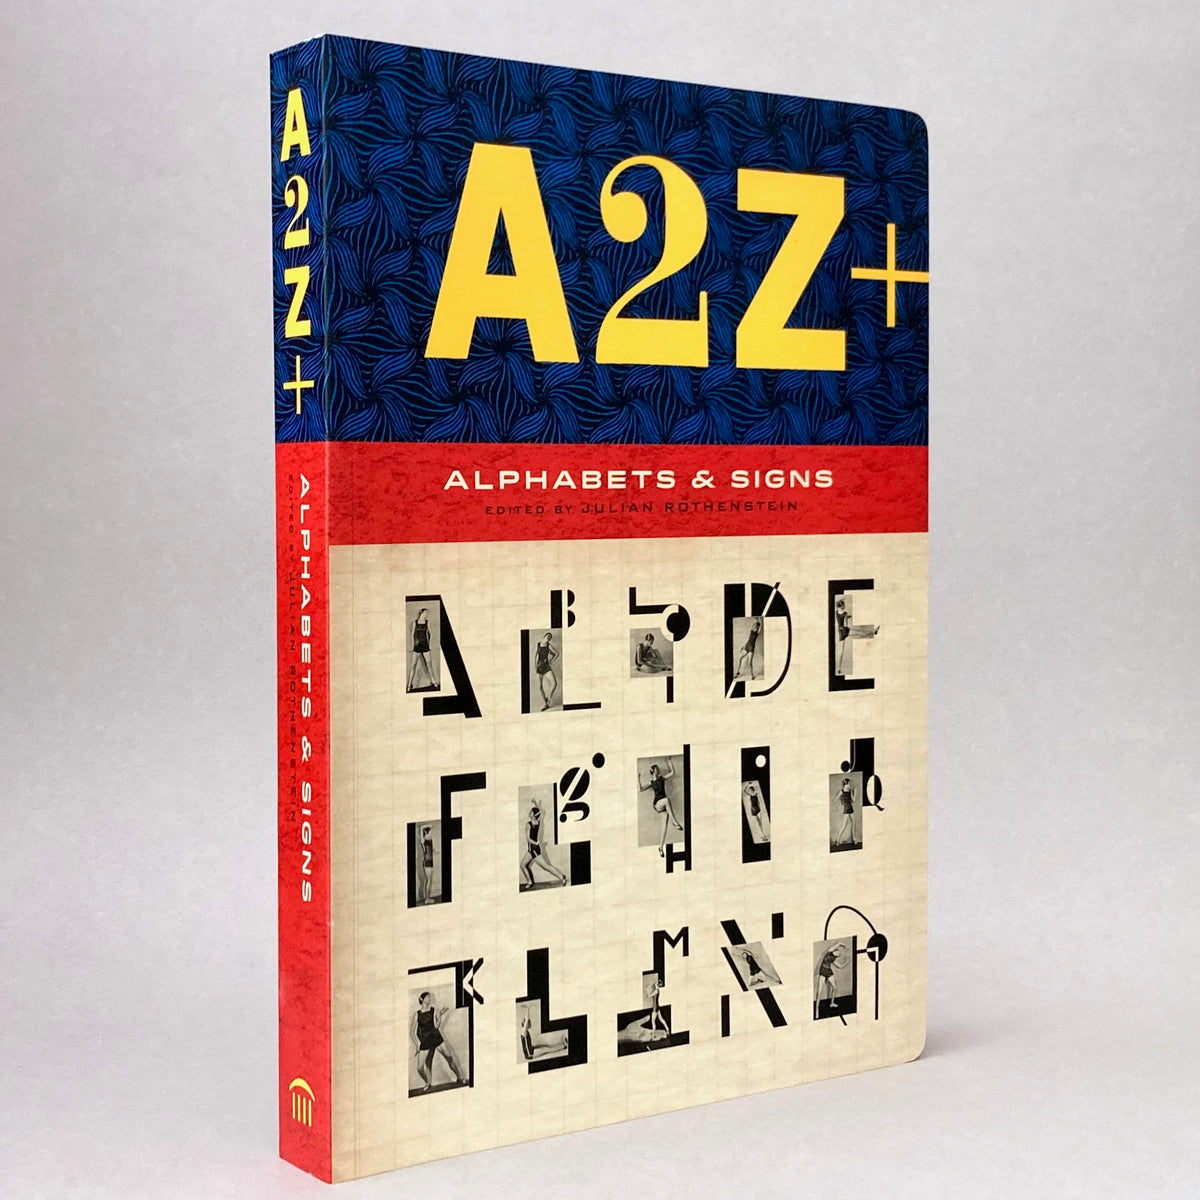 A2Z+ : Alphabets & Signs